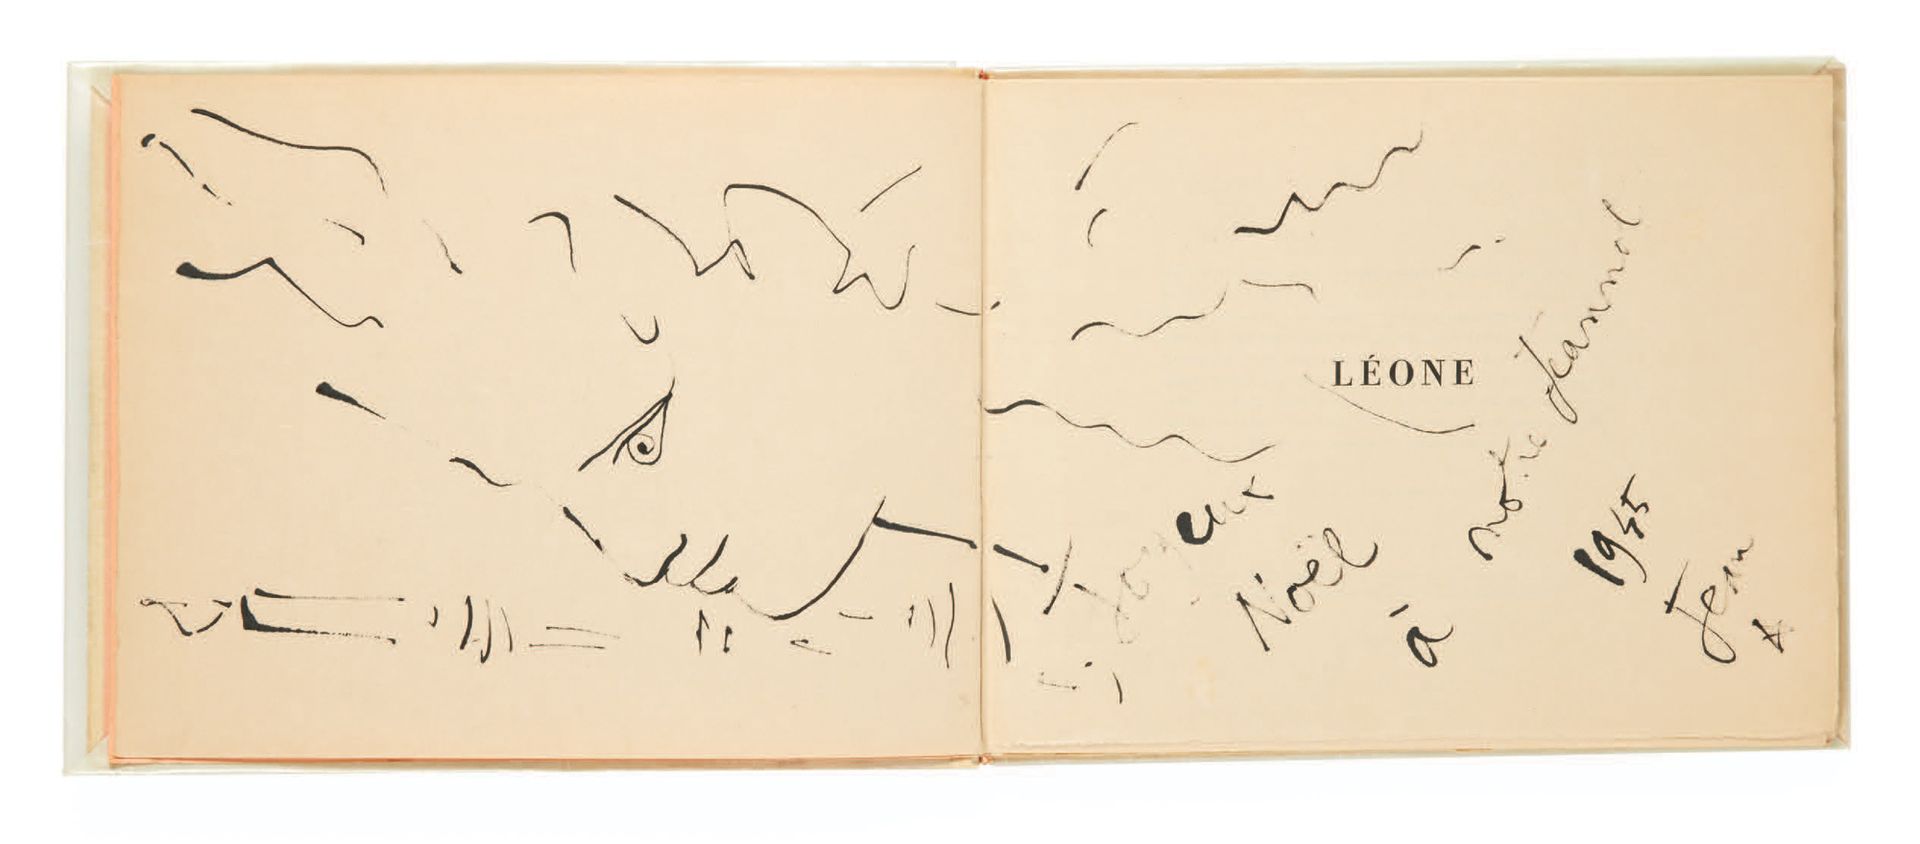 Jean COCTEAU. Léone. Paris, NRF, 1945.
In-8 oblong, publisher's cardboard.
First&hellip;